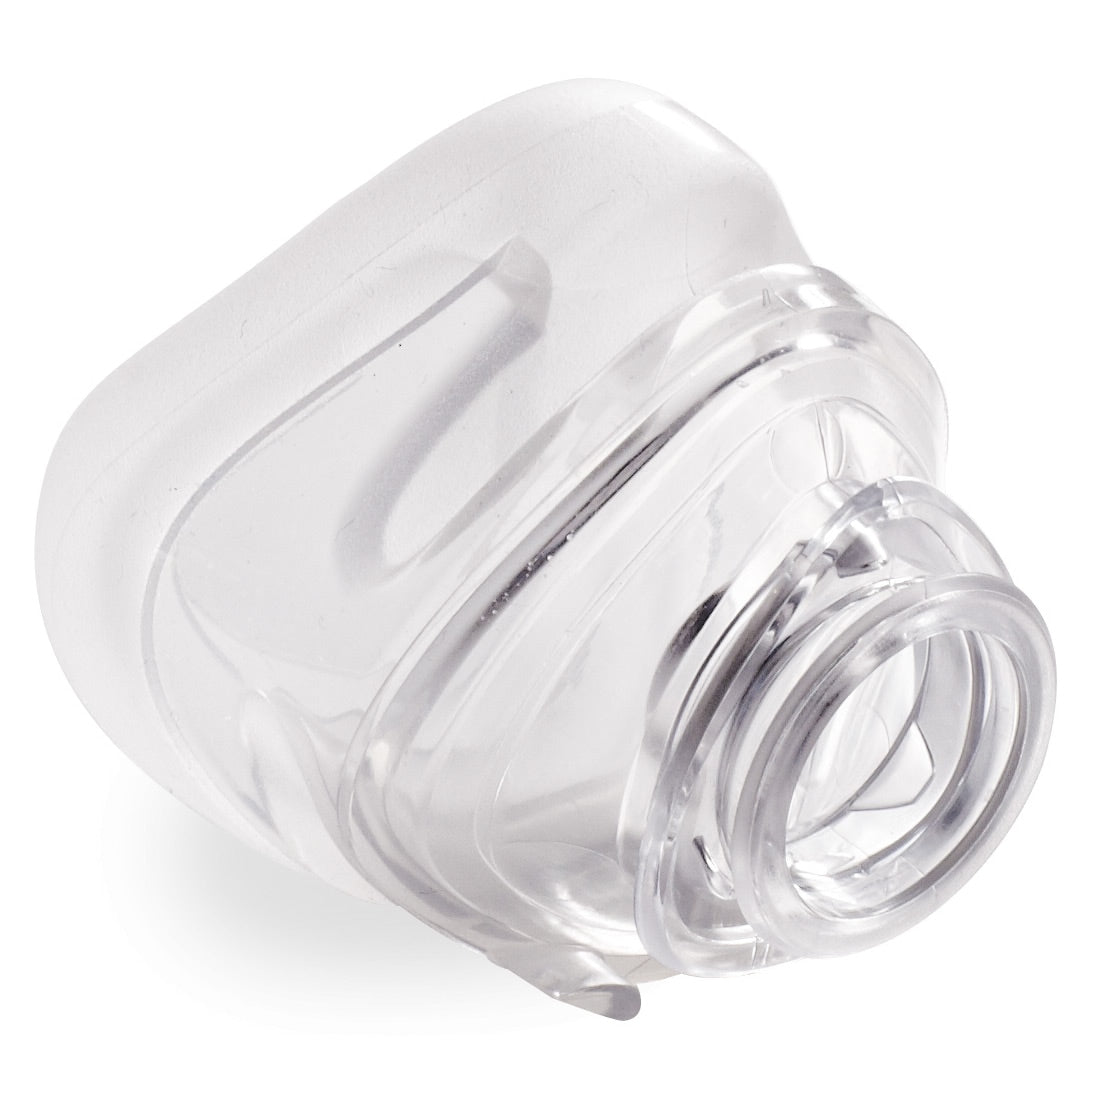 Nasal Cushion for Wisp CPAP/BiPAP Masks